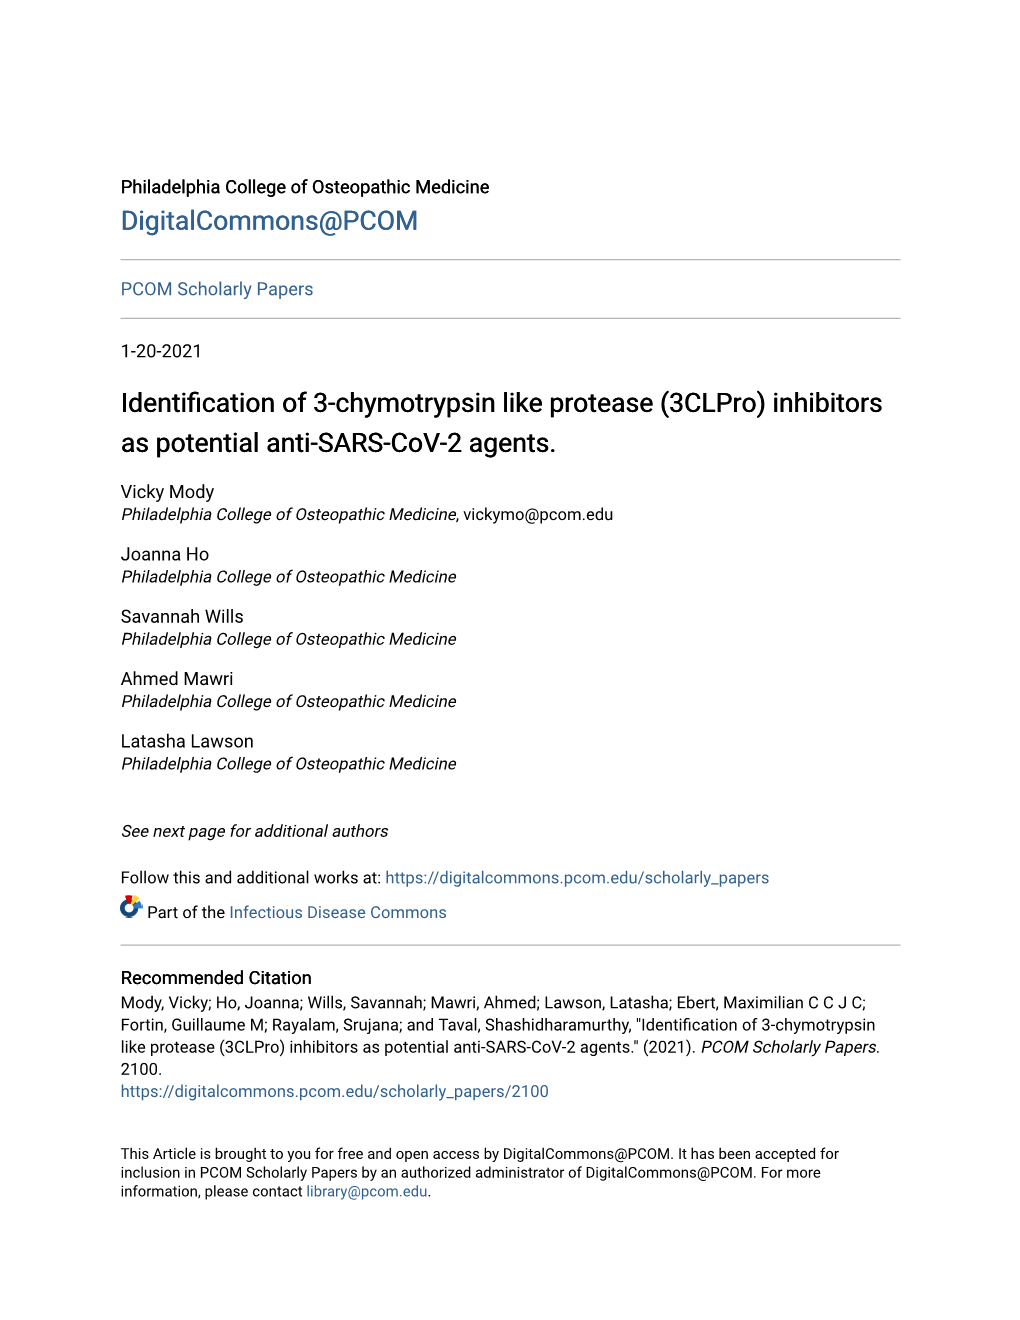 (3Clpro) Inhibitors As Potential Anti-SARS-Cov-2 Agents